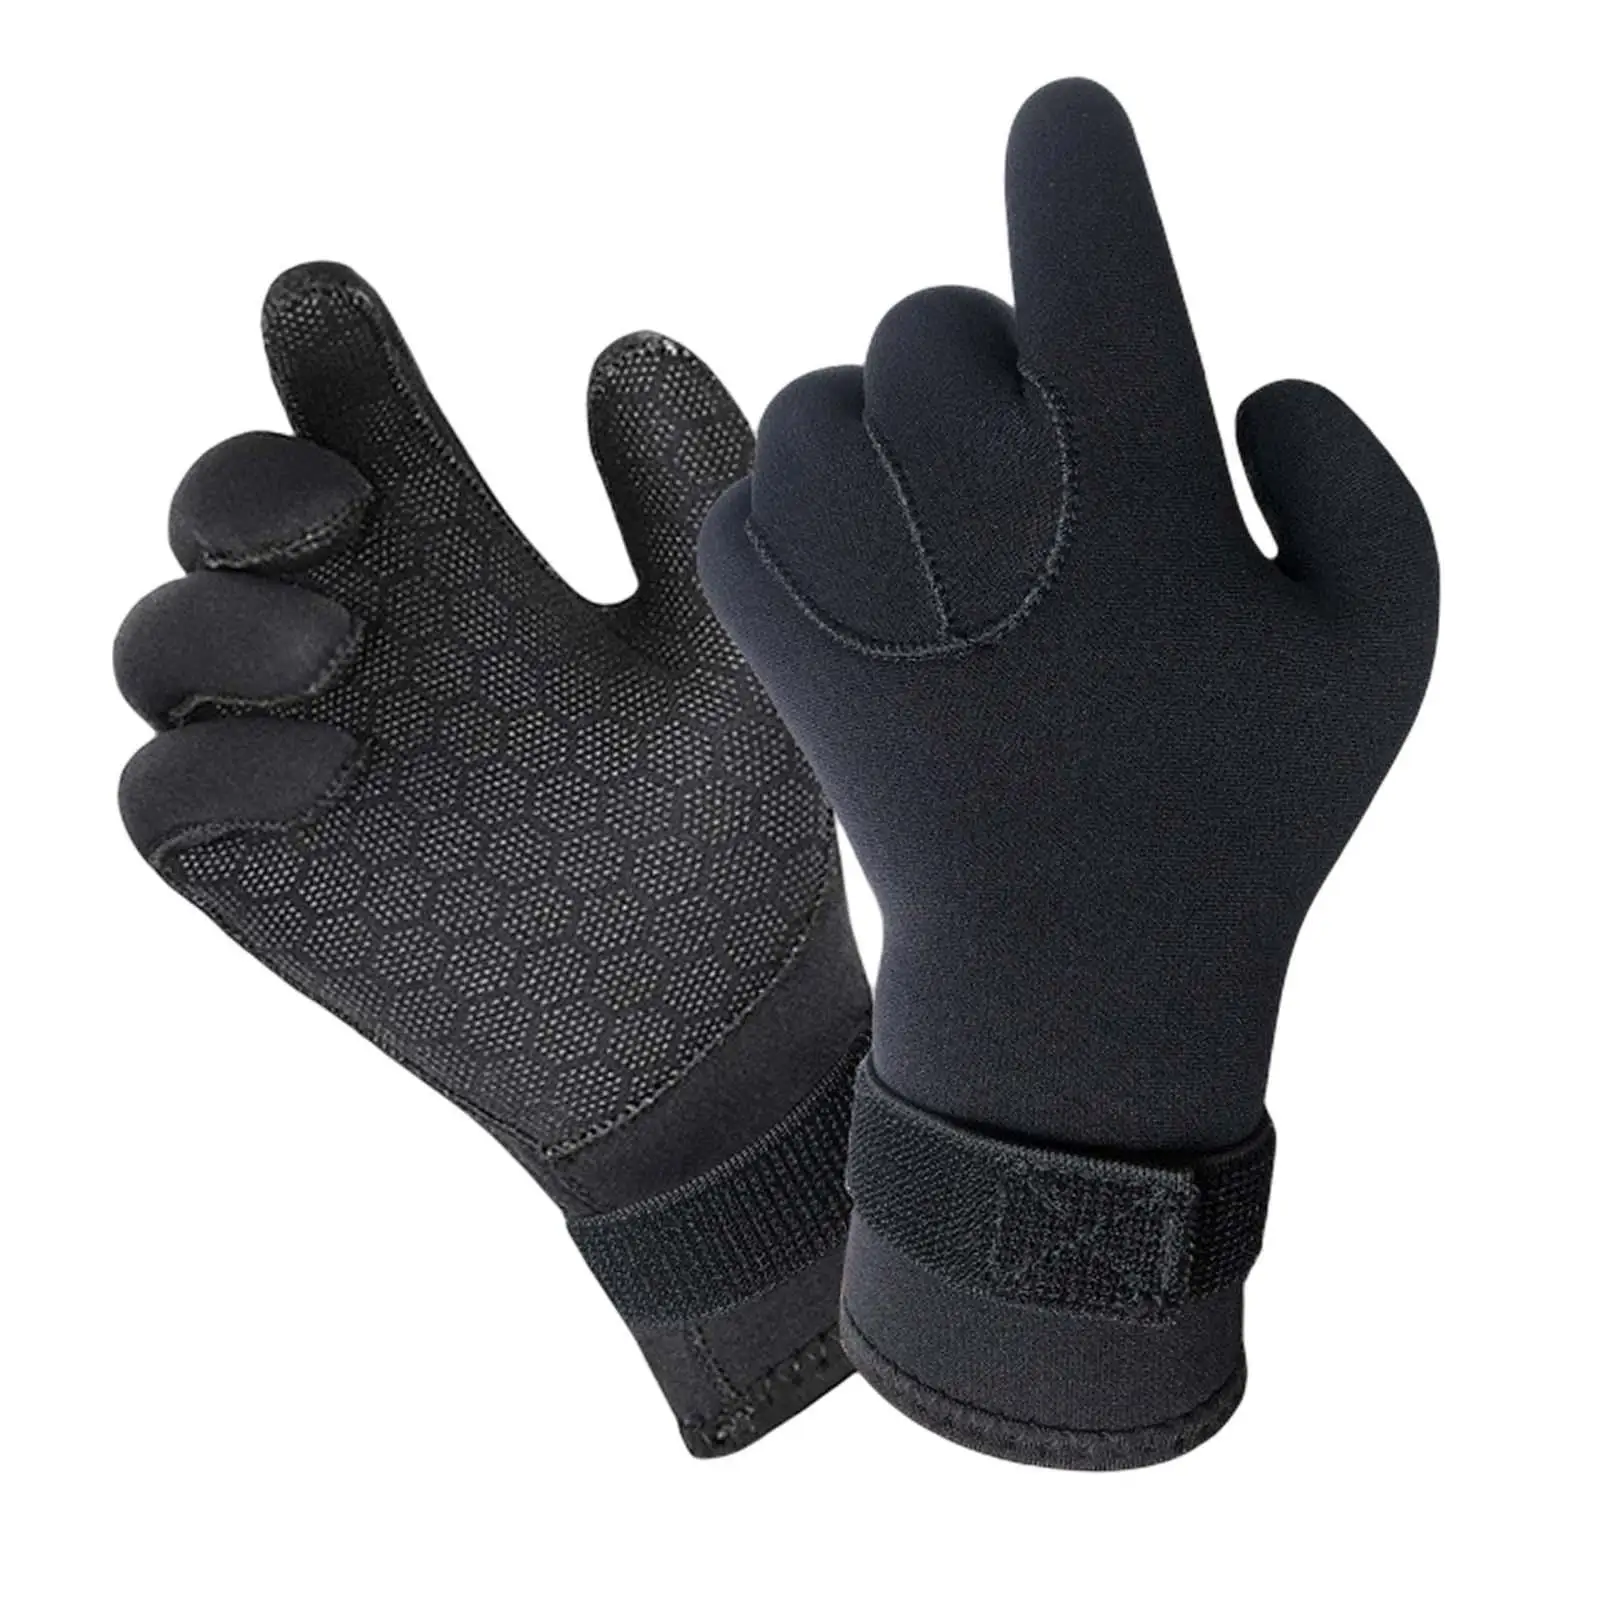 Scuba Diving Gloves Neoprene Wetsuit Winter Gloves Dive Gloves Five Finger Gloves for Spearfishing Rafting Water Sports Paddling